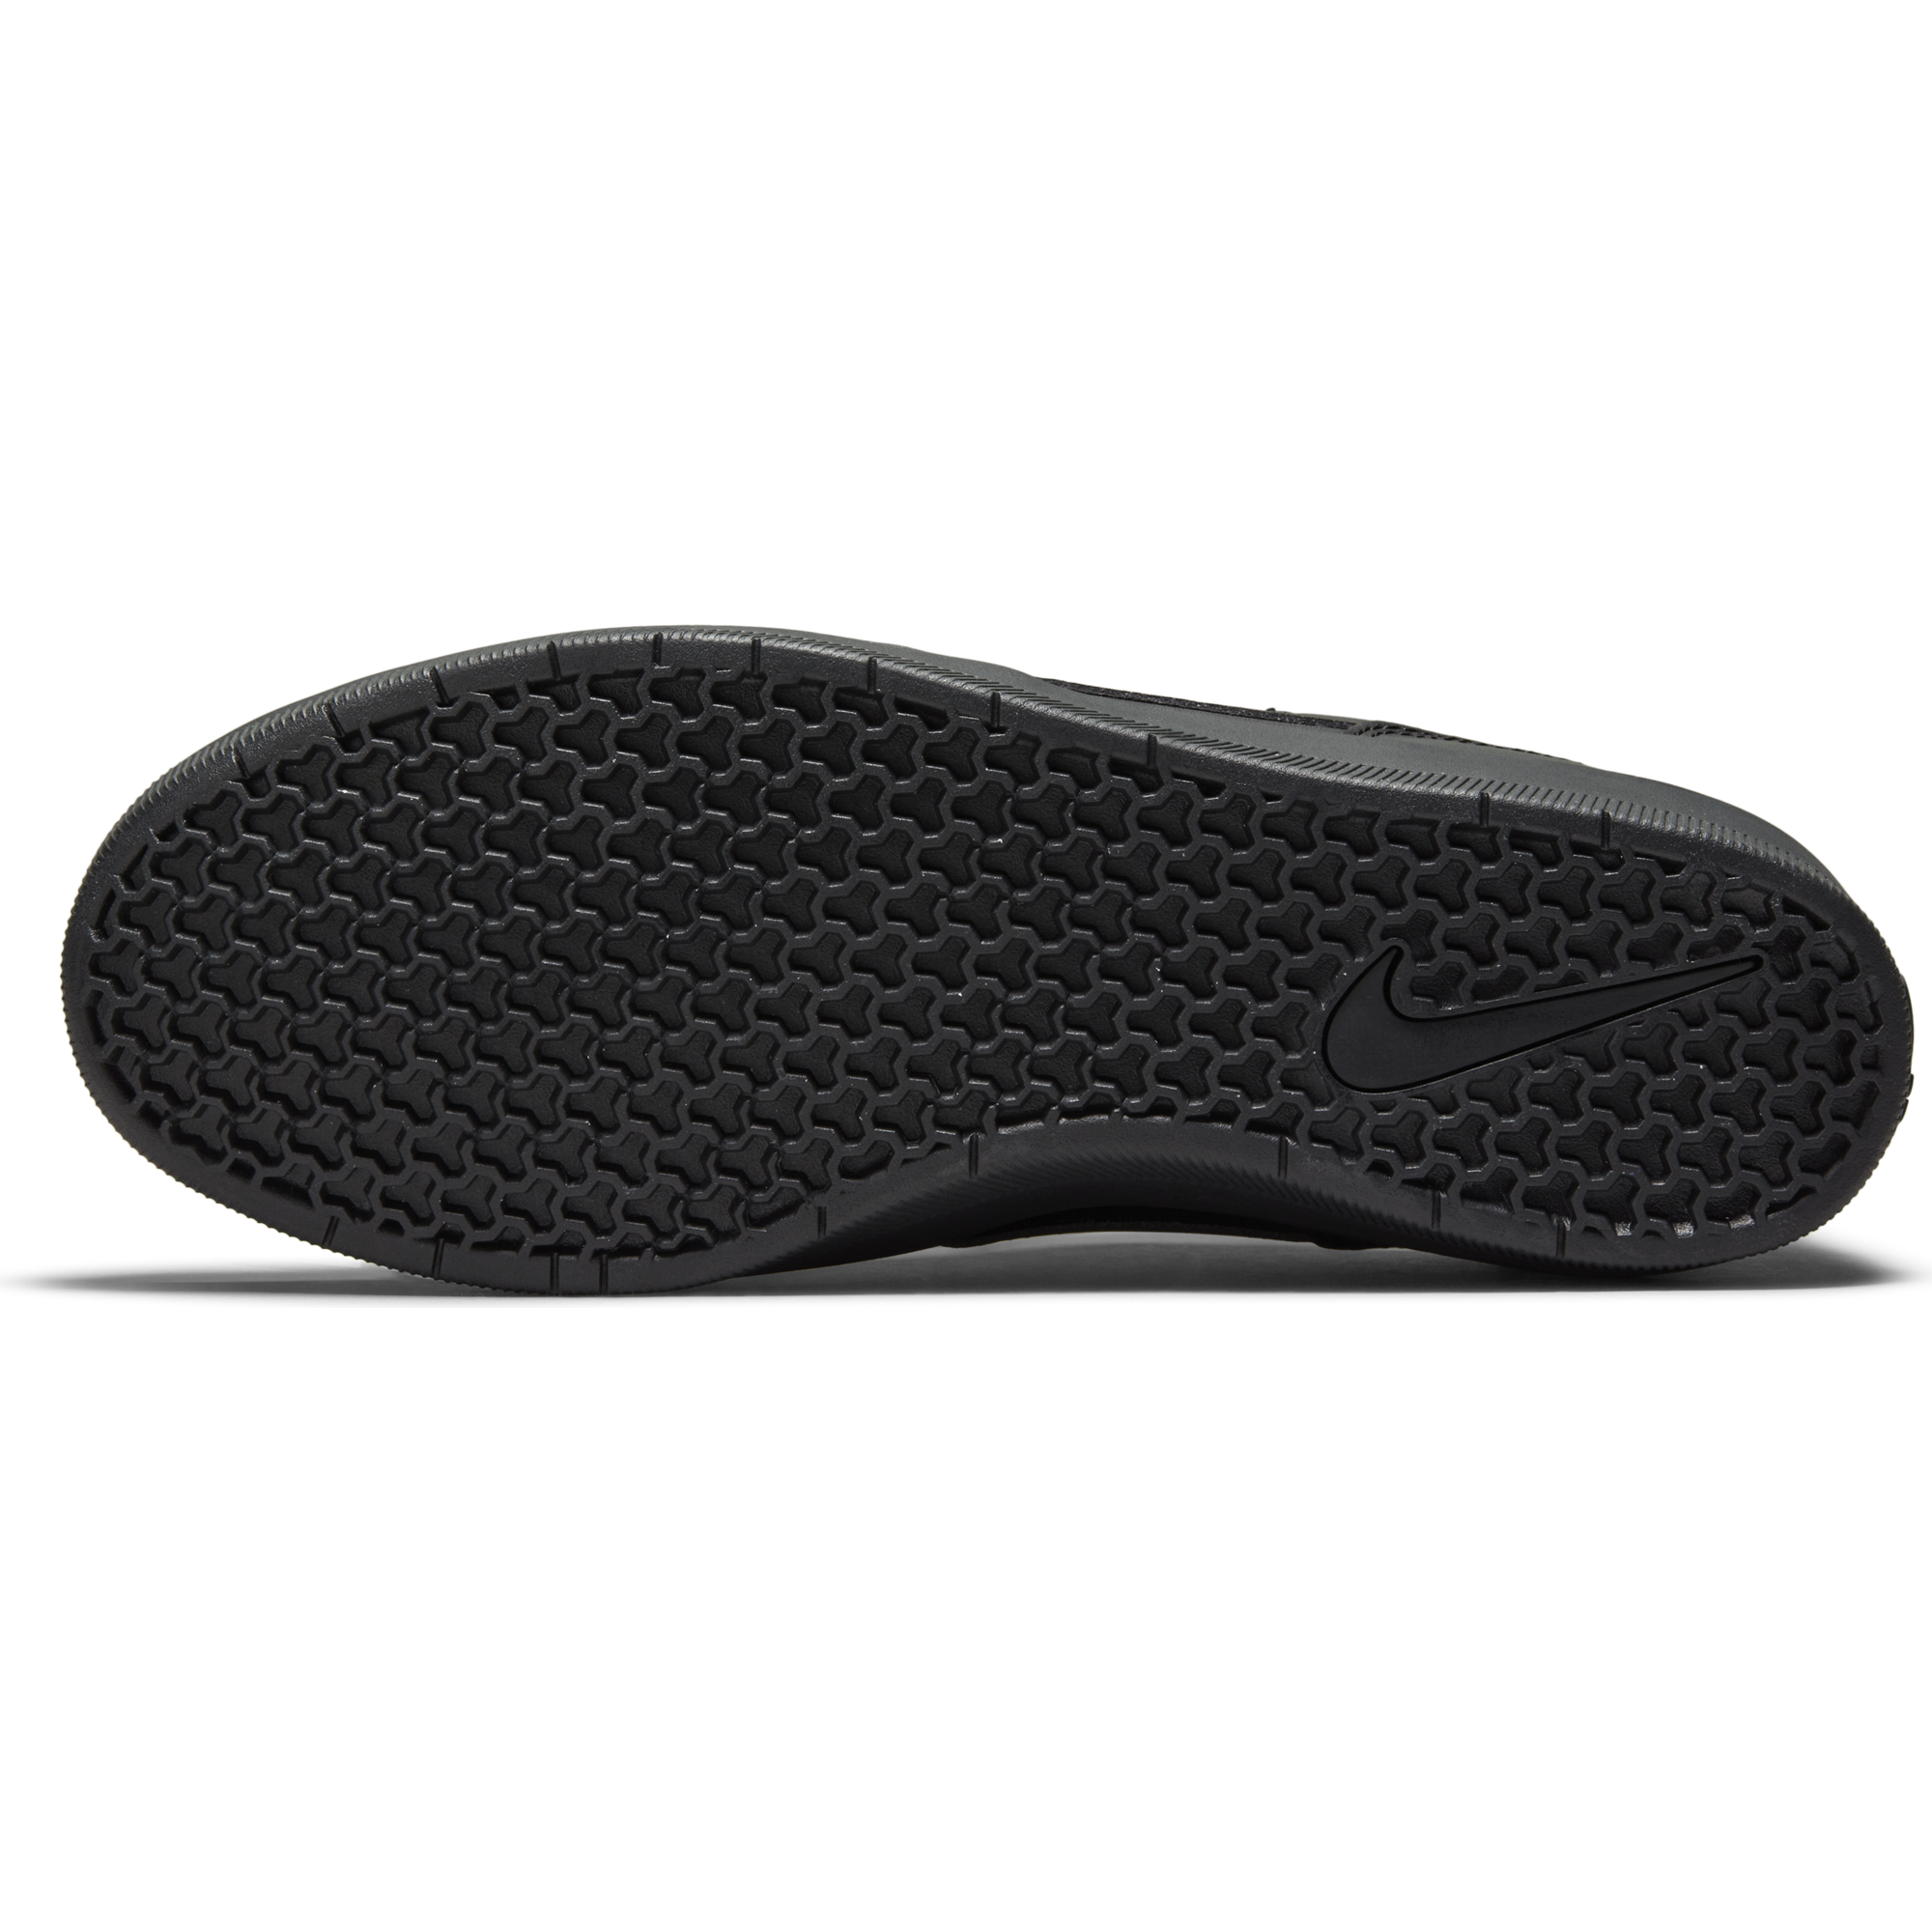 Nike SB Force 58 Premium Leather Skate Shoes